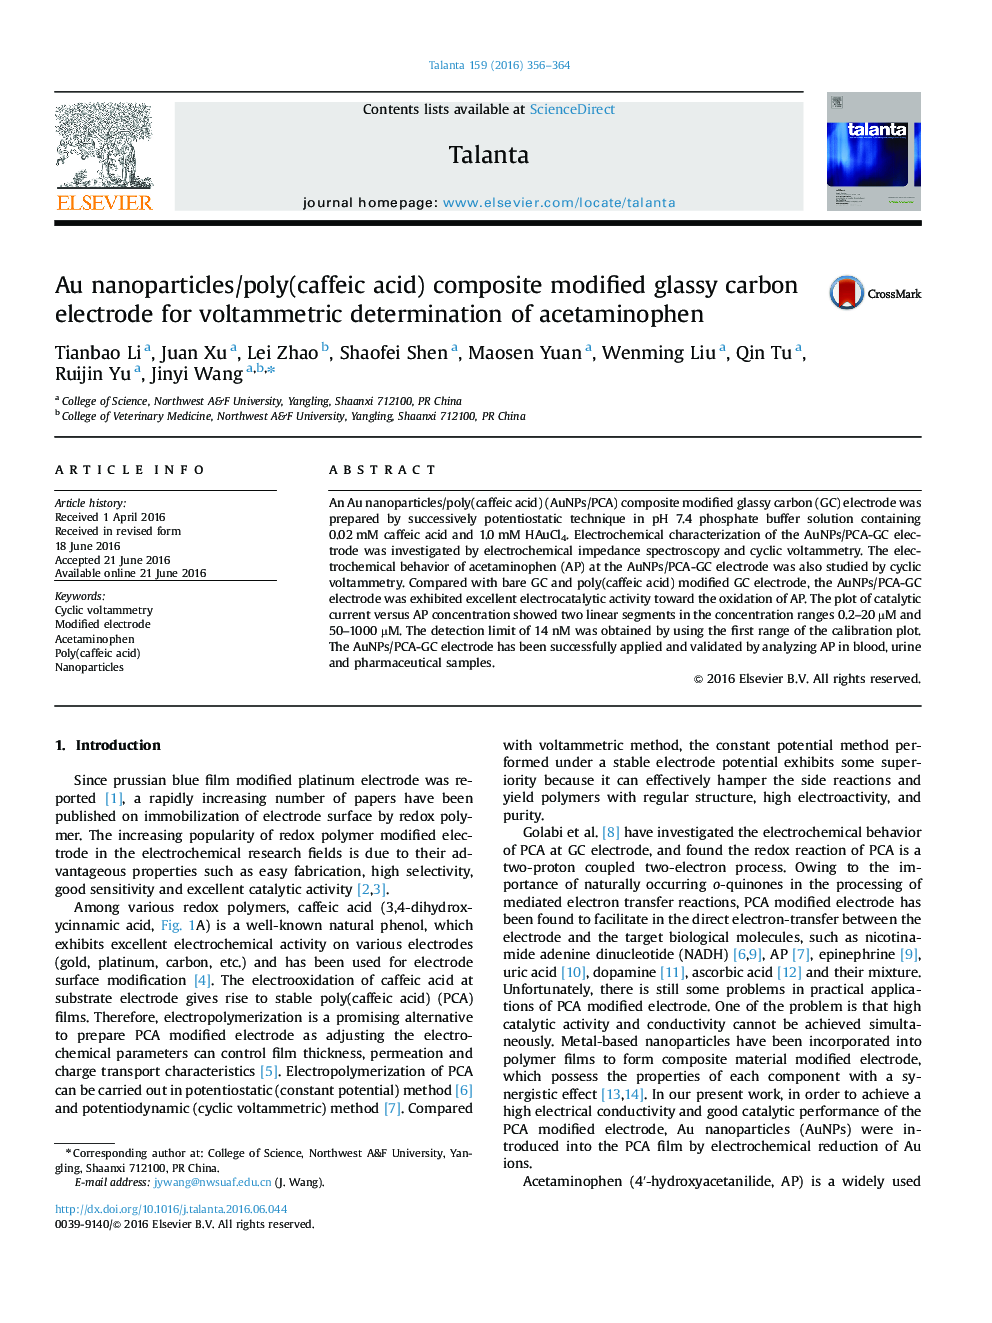 Au nanoparticles/poly(caffeic acid) composite modified glassy carbon electrode for voltammetric determination of acetaminophen